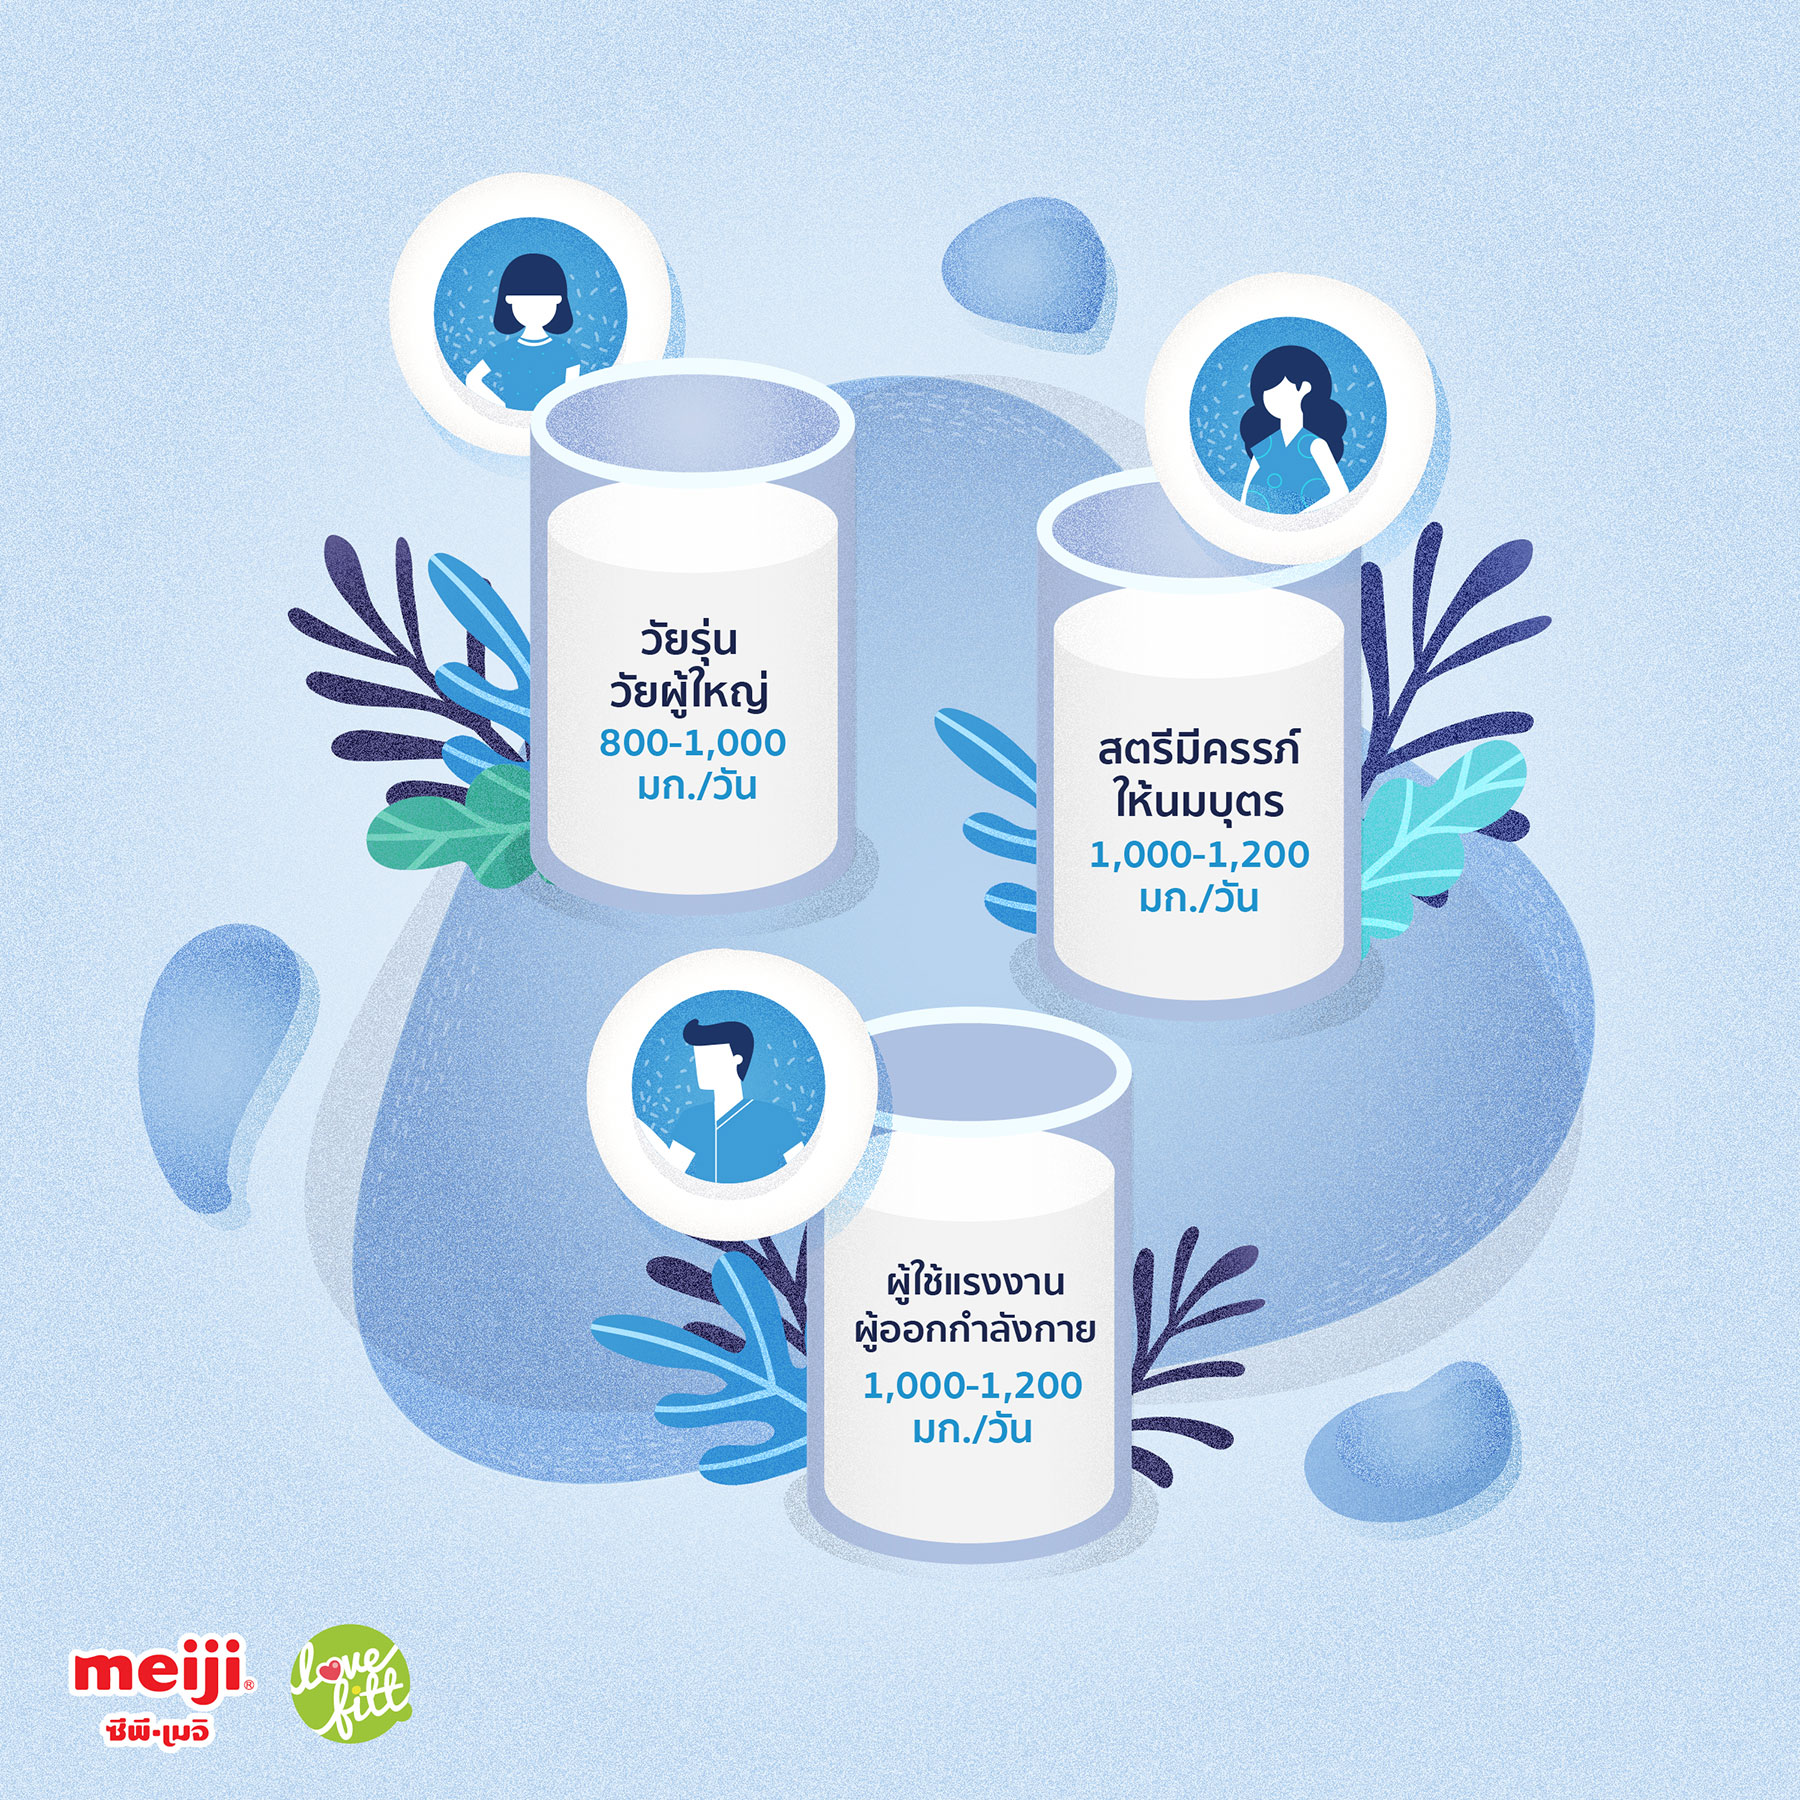 meiji-lactose-free-milk-img-02